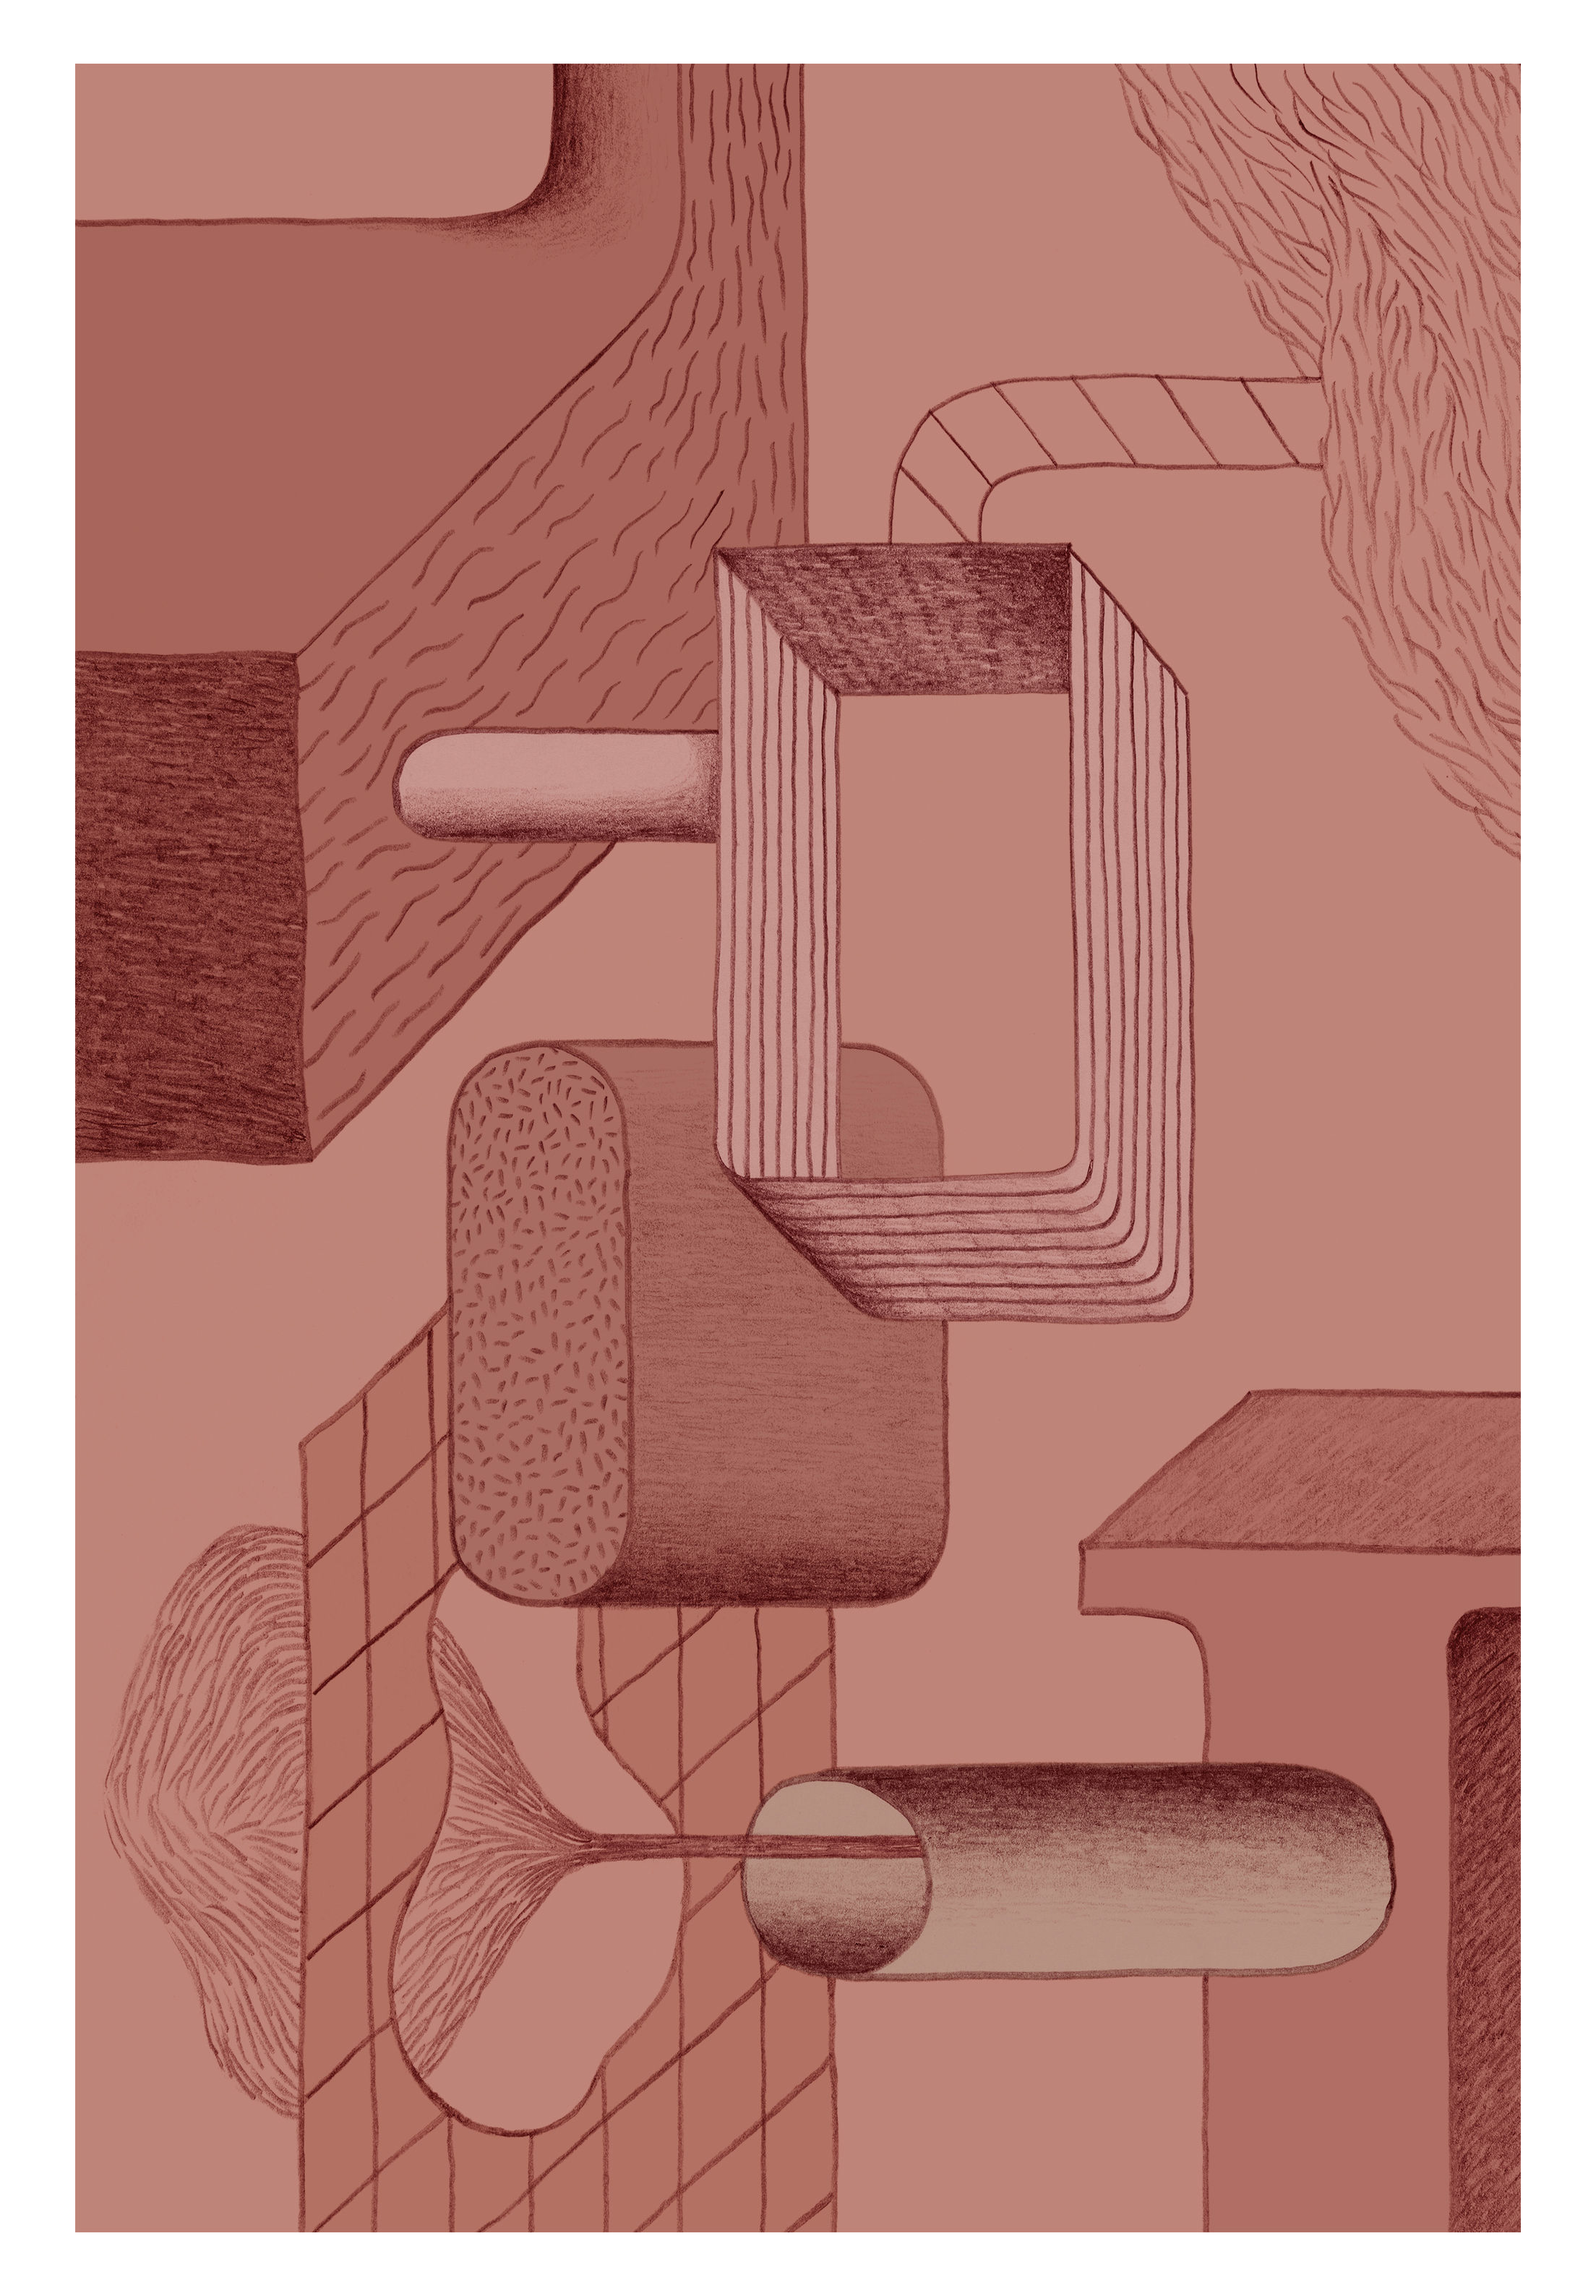 Teppich Station von Made in design Editions - rosa | Made In Design